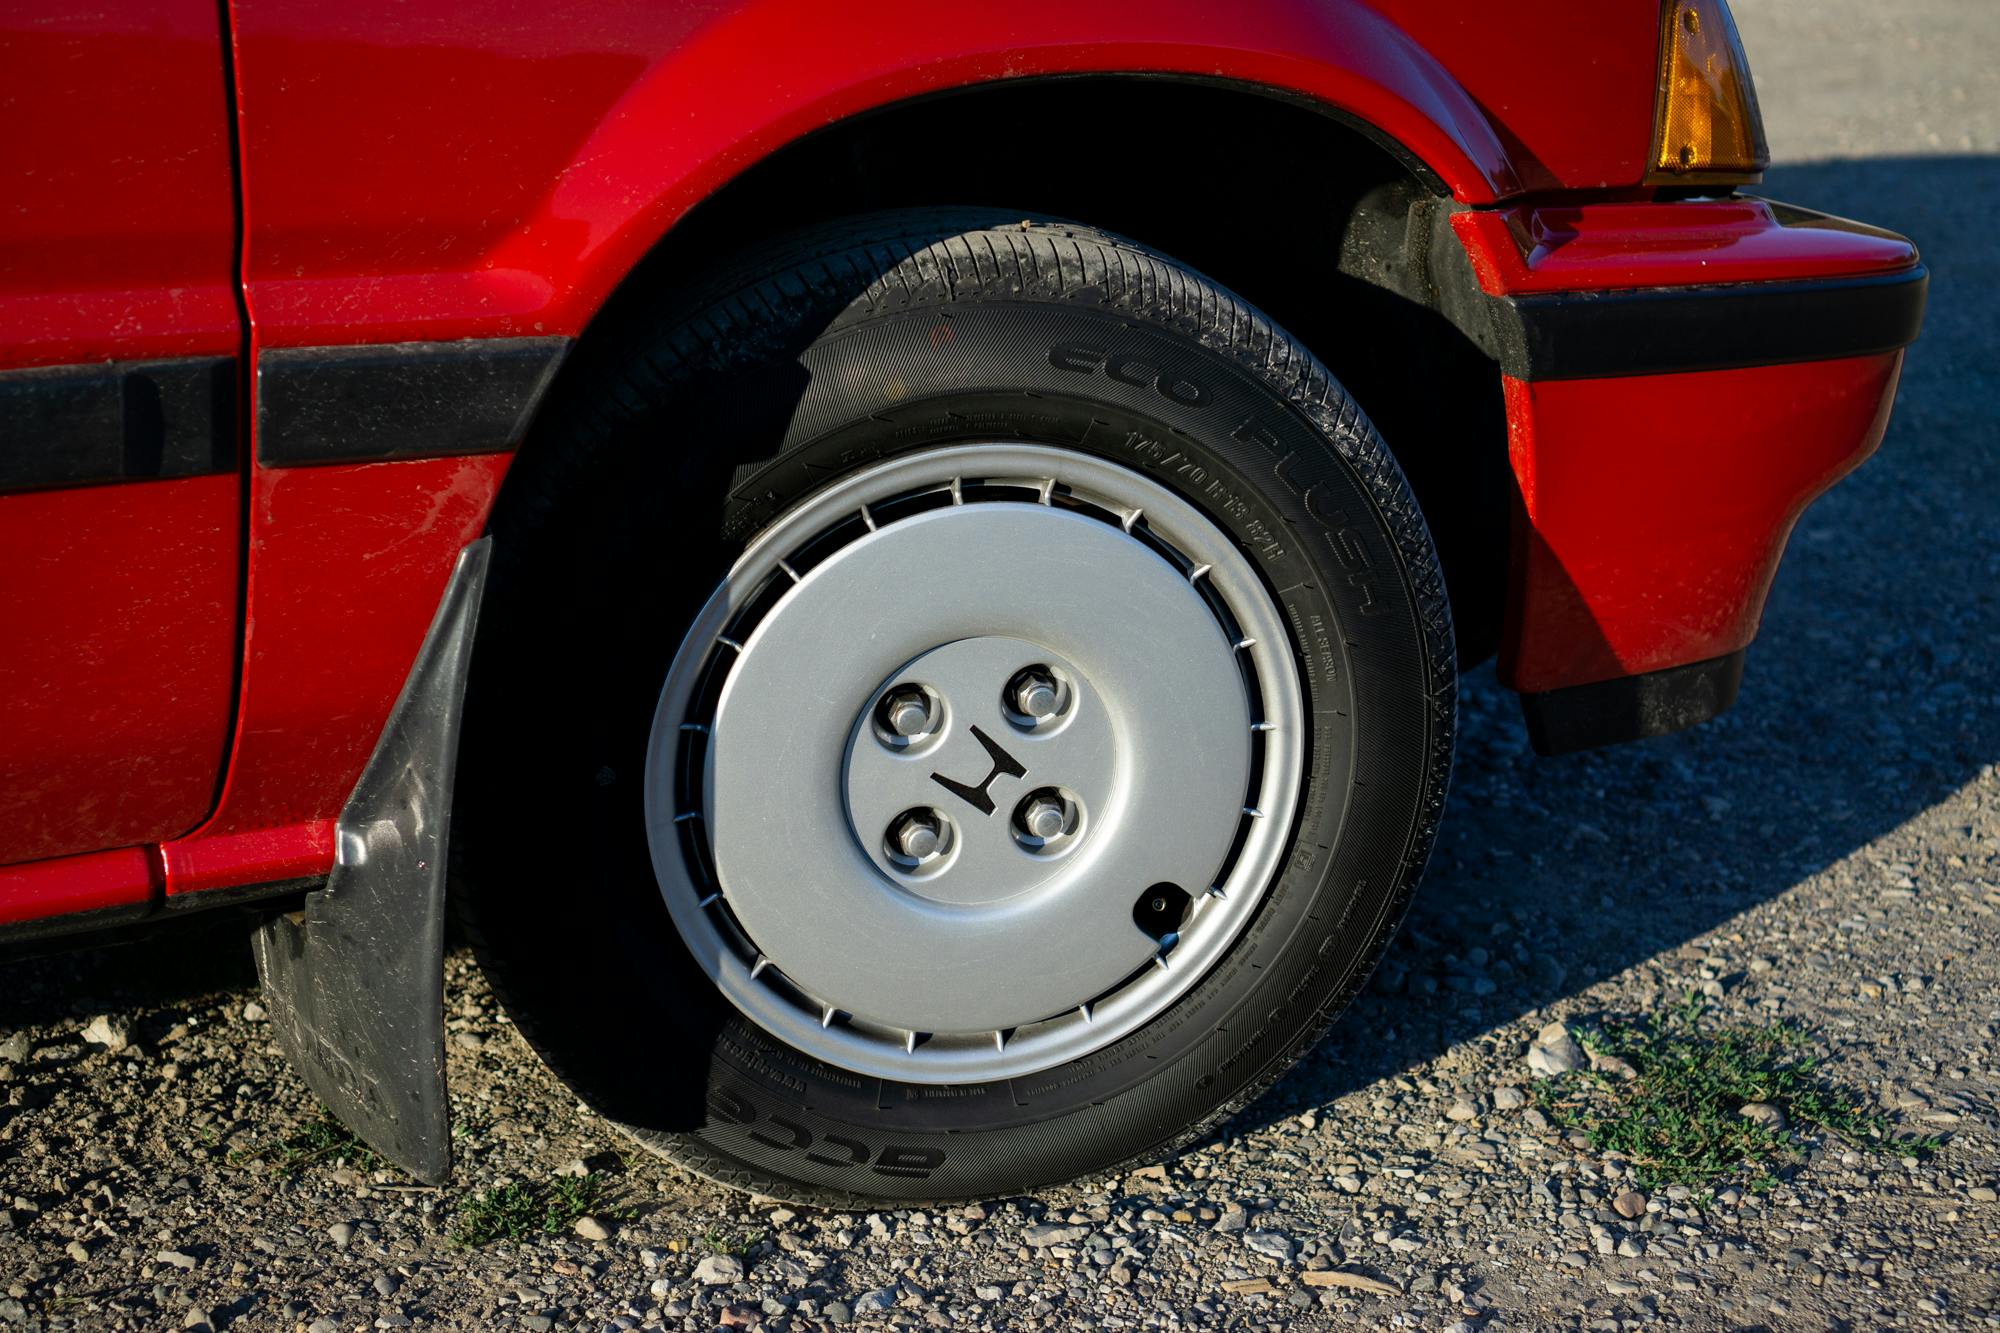 1986 Honda Civic Si wheel tire